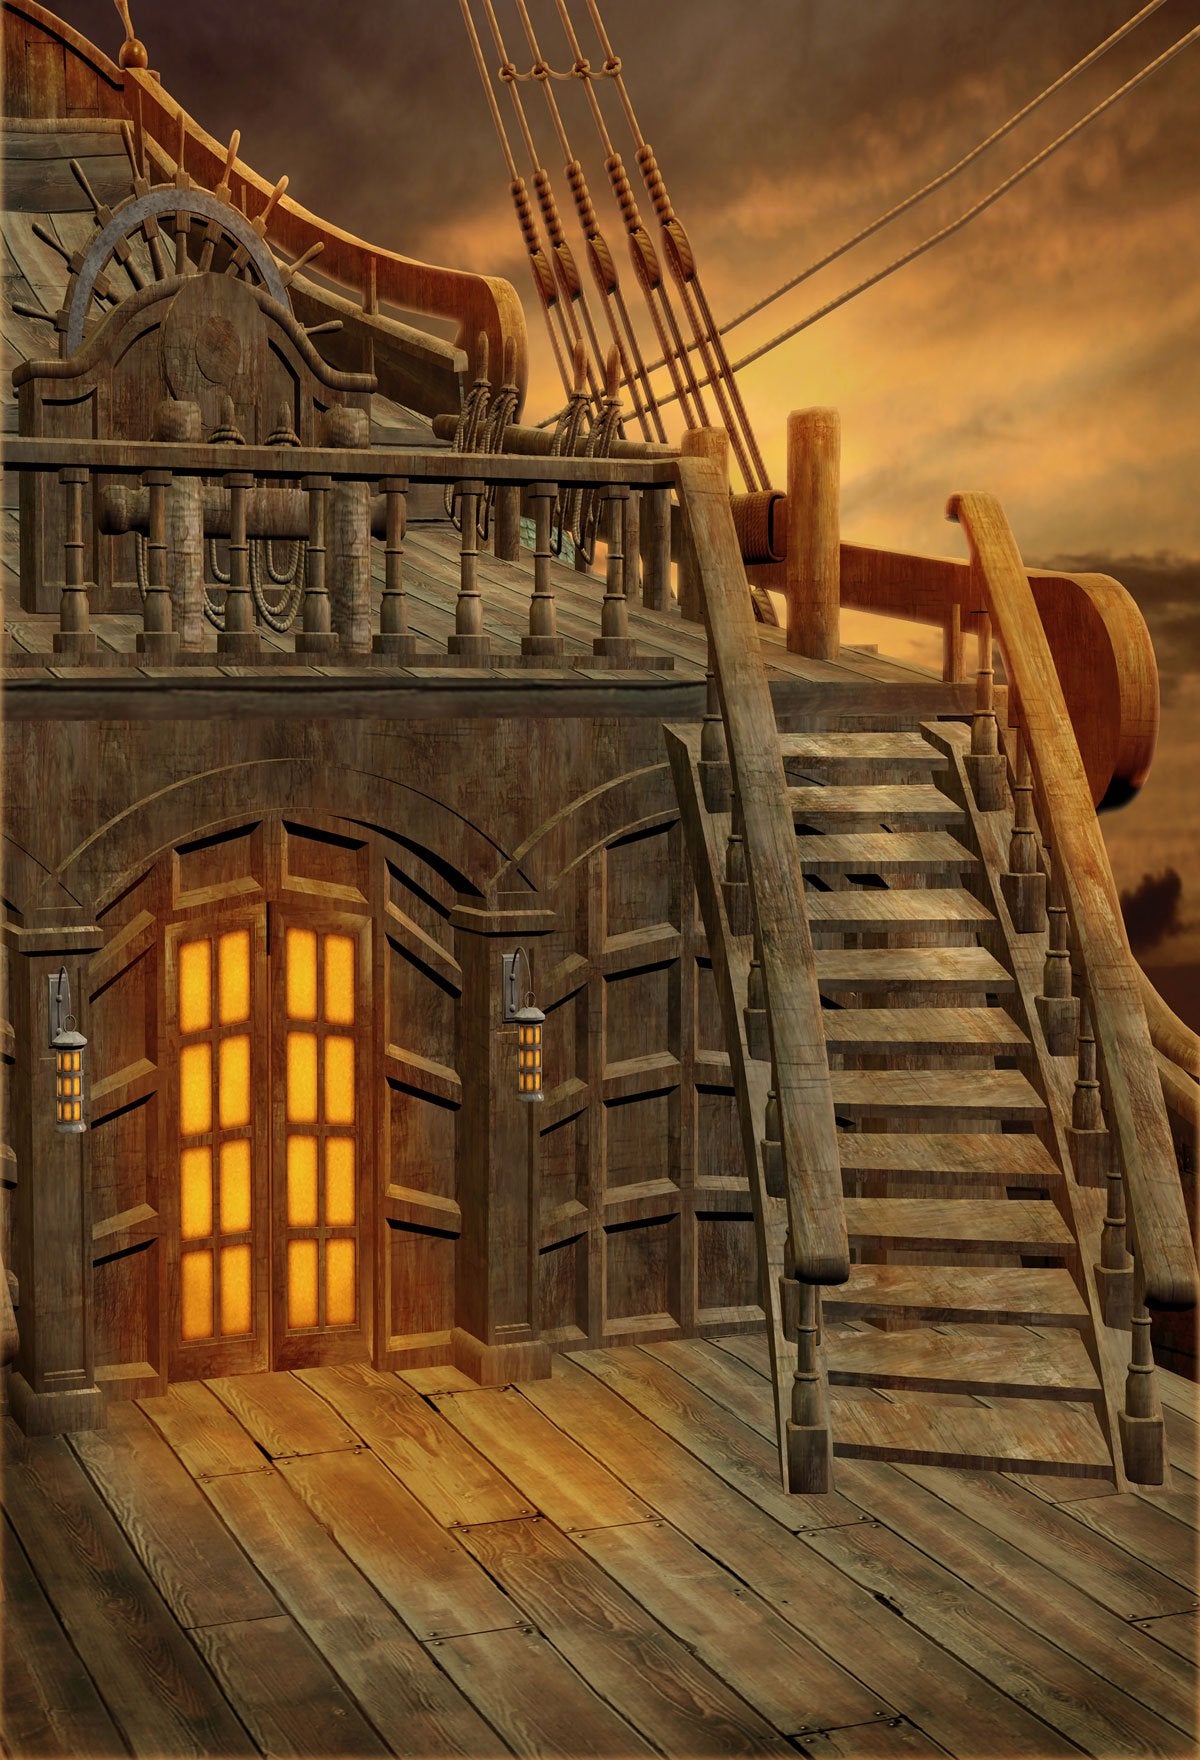 Katebackdrop£ºKate Pirates of the Ship photography Backdrop for studio